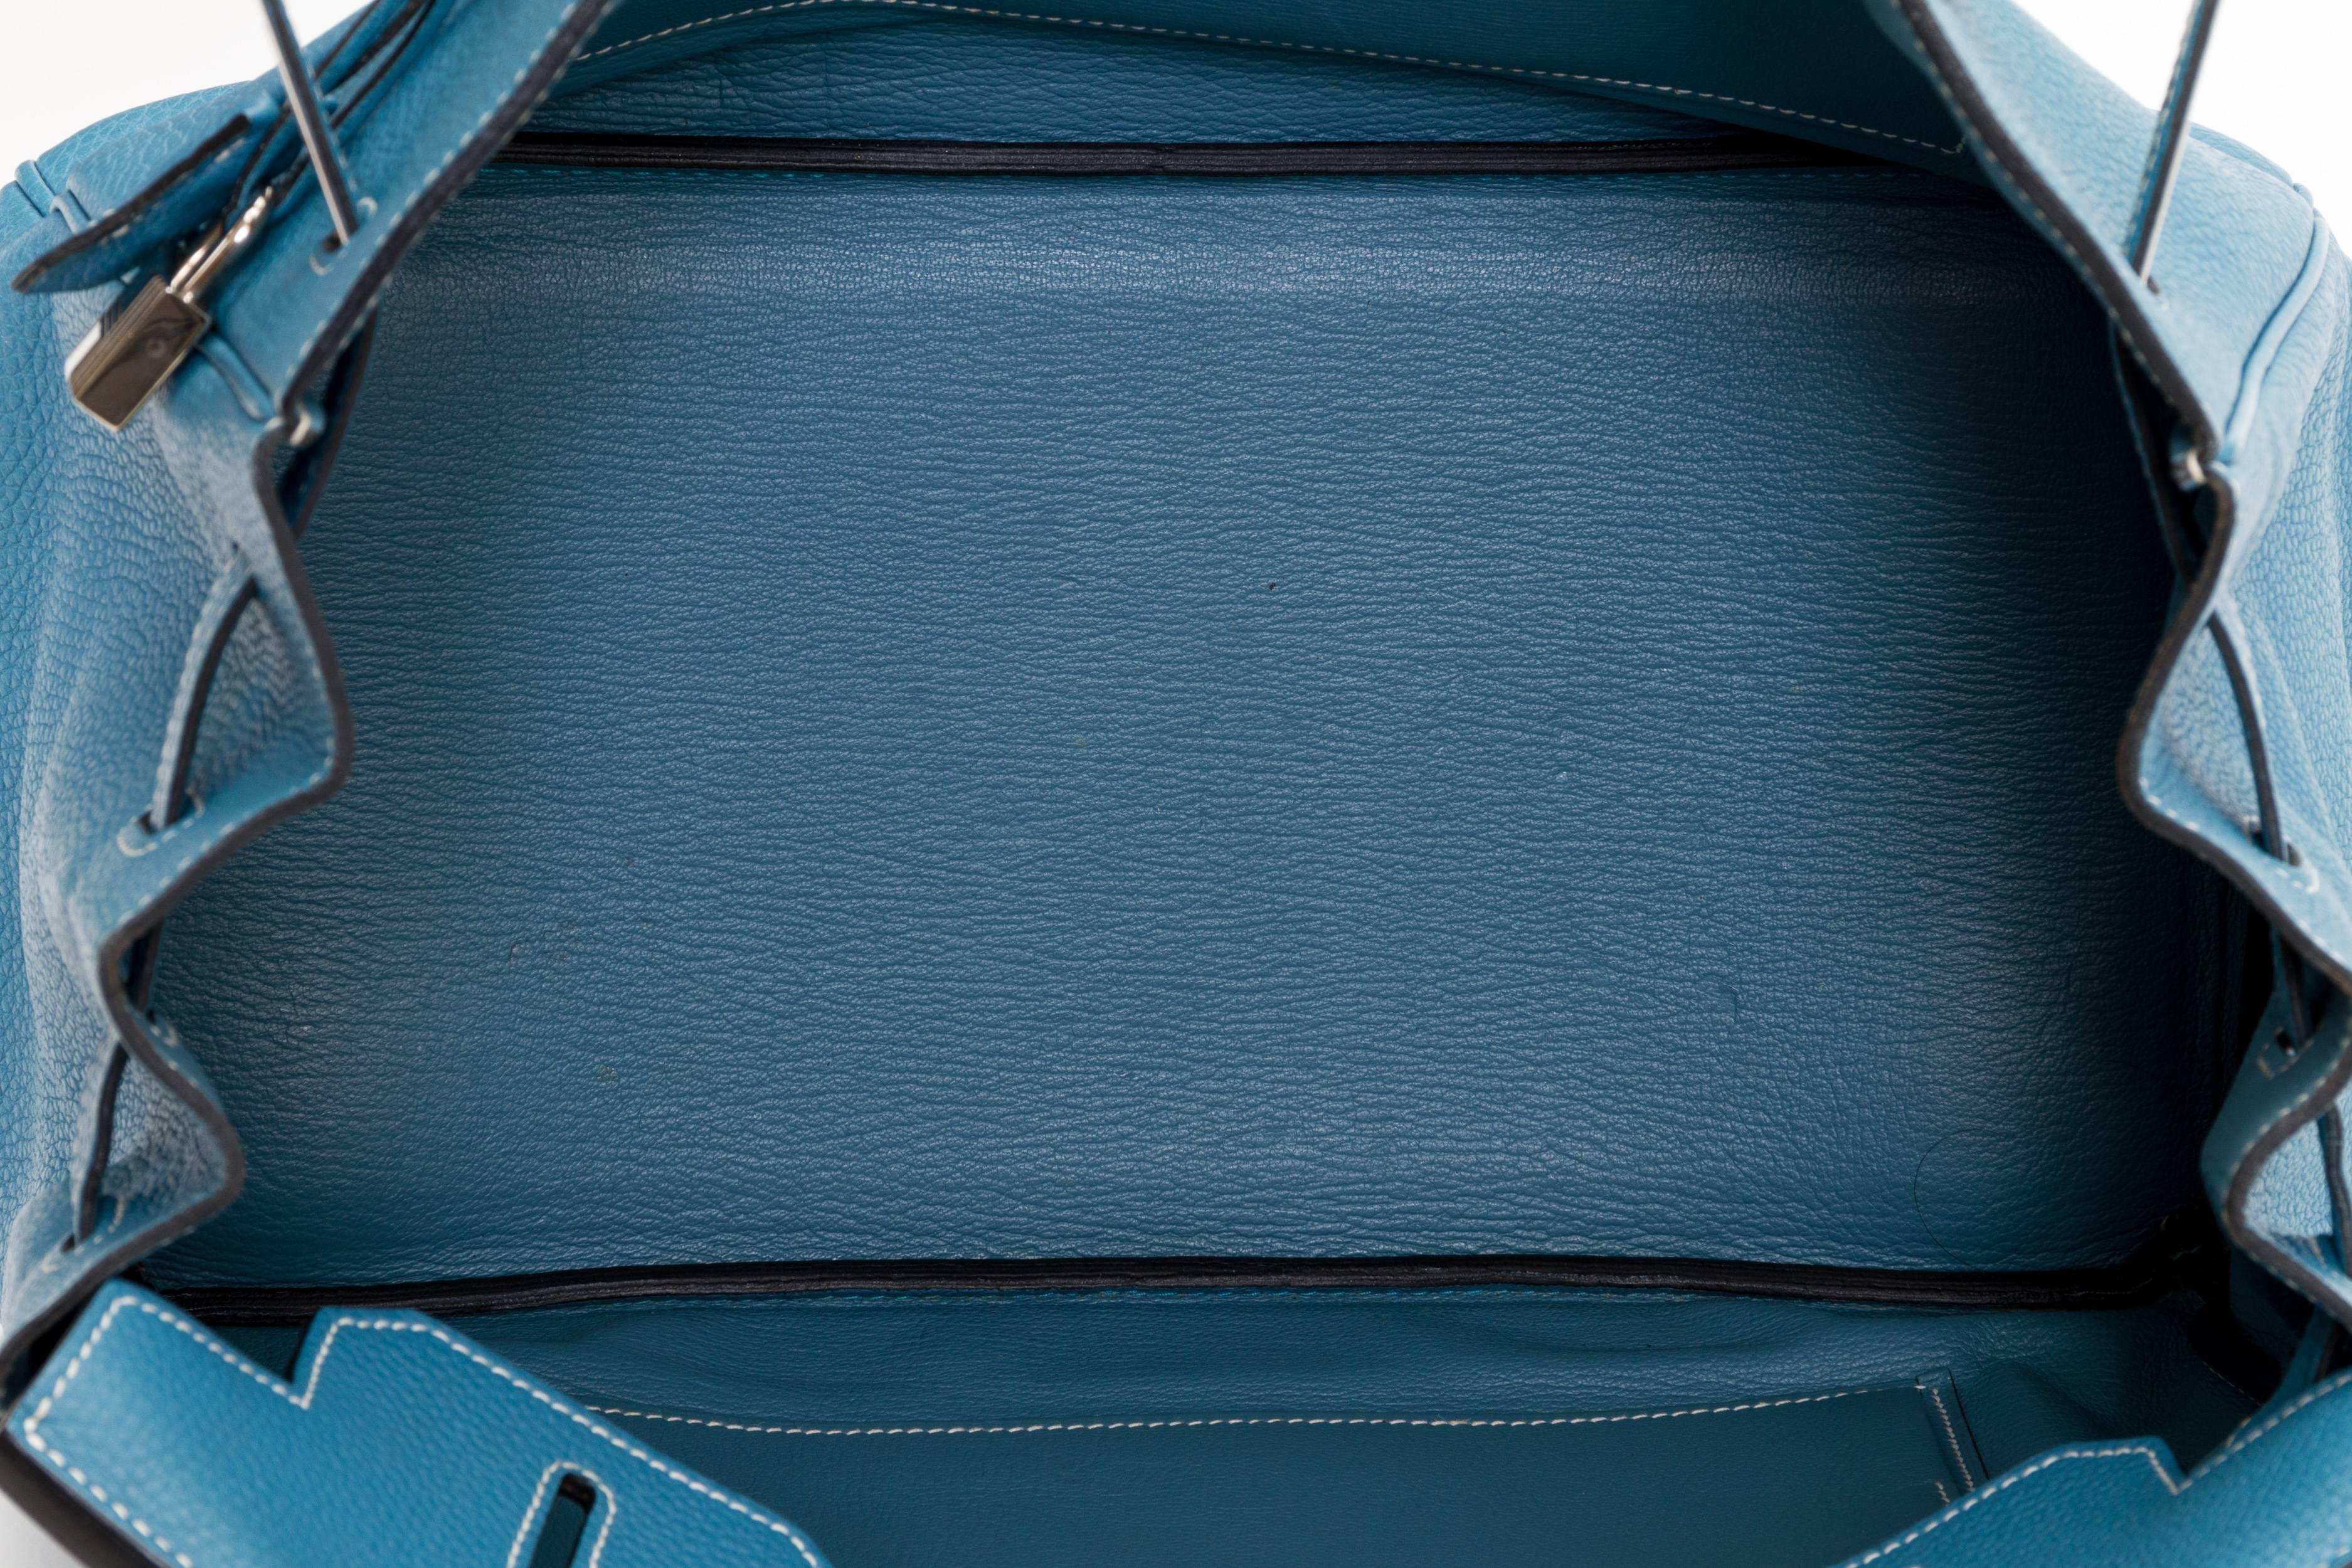  Hermès 35cm Blue Jean Clemence Birkin Bag 4